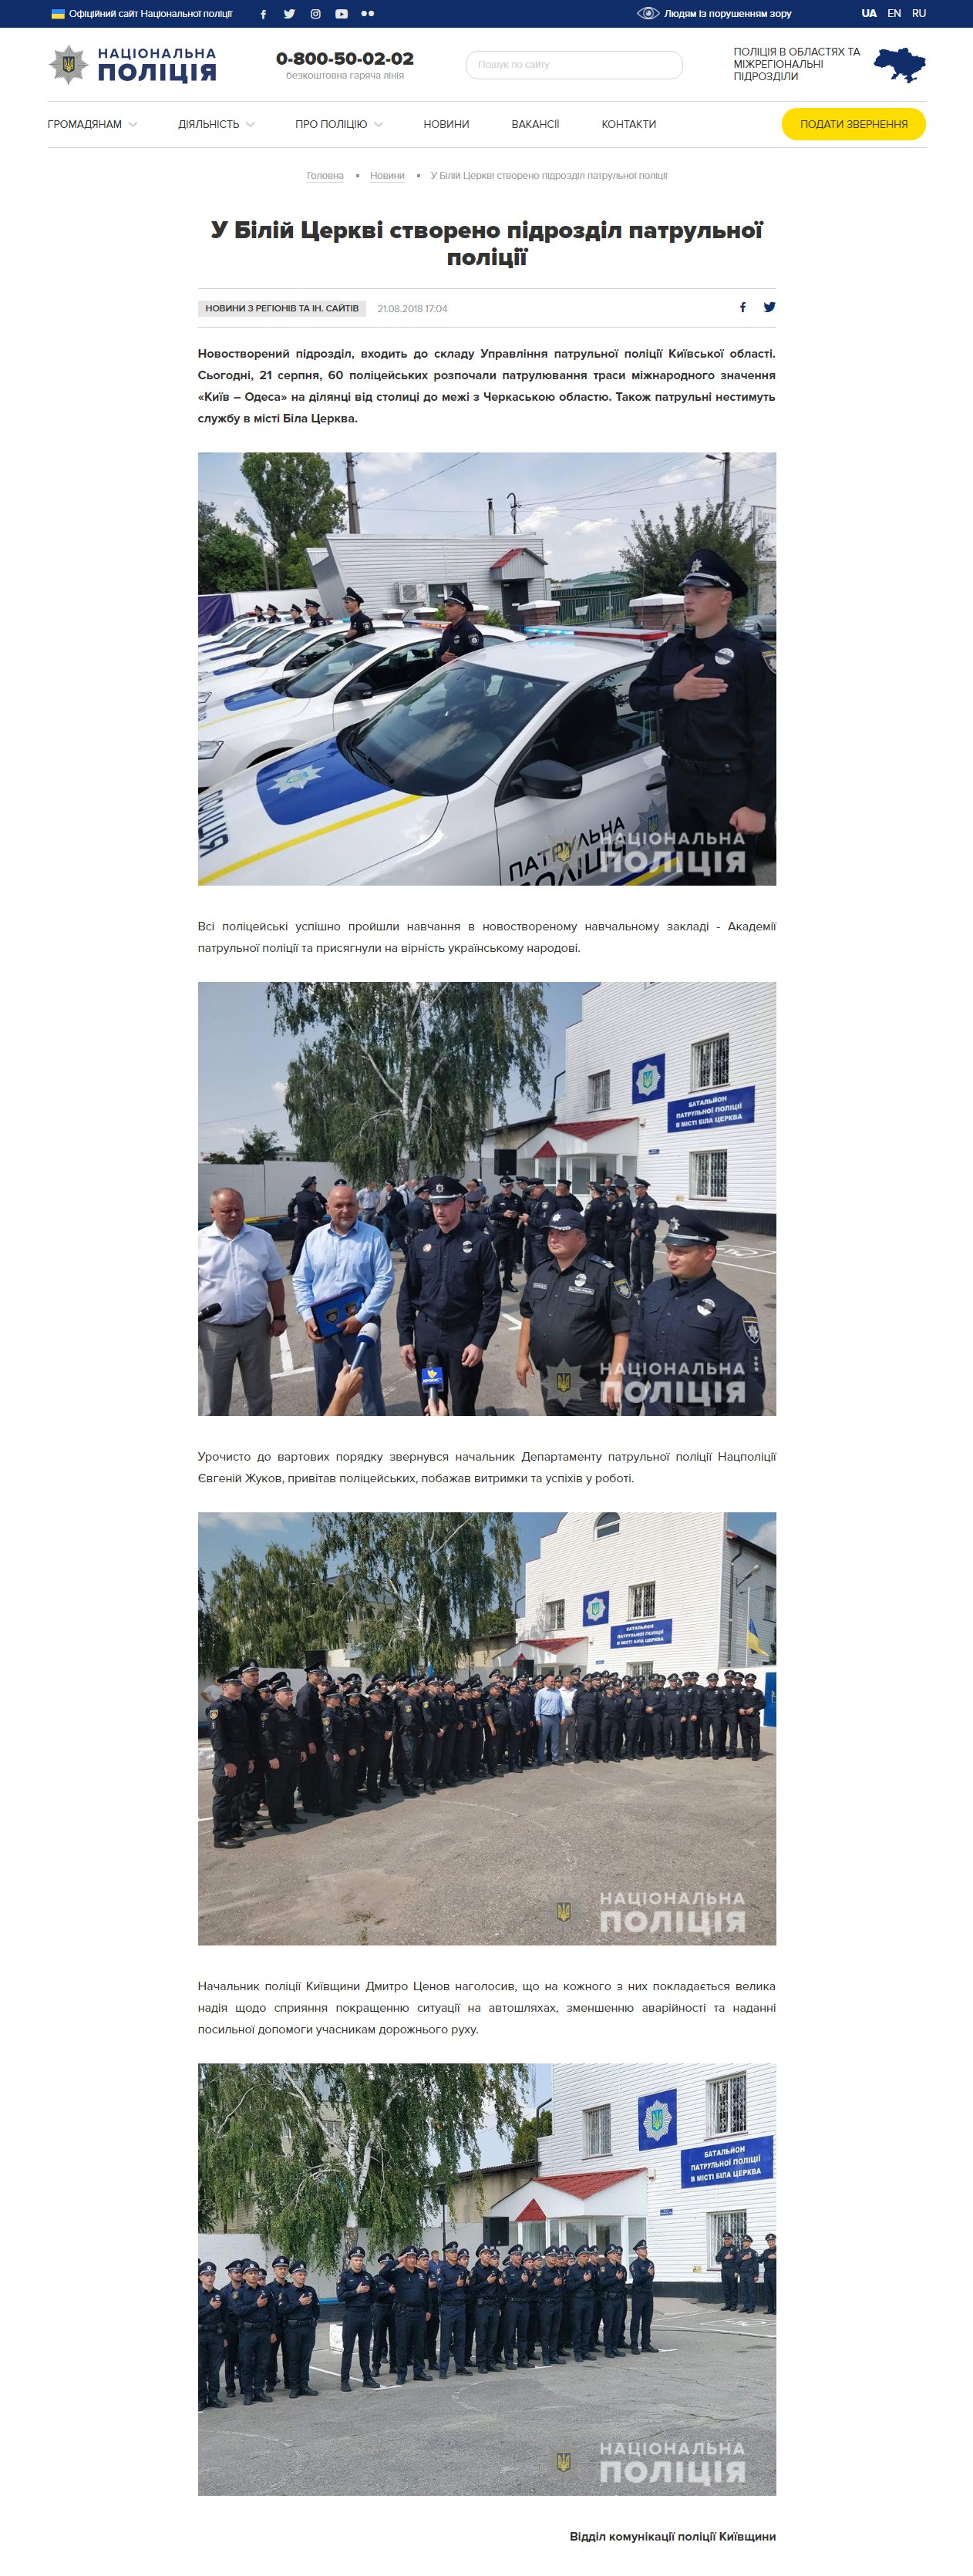 https://www.npu.gov.ua/news/novini-z-regioniv-ta-in-sajtiv/patrulyuvati-mizhnarodnu-avtomagistral-na-kijivshhini-vijshli-60-novospechenix-policzejskix/